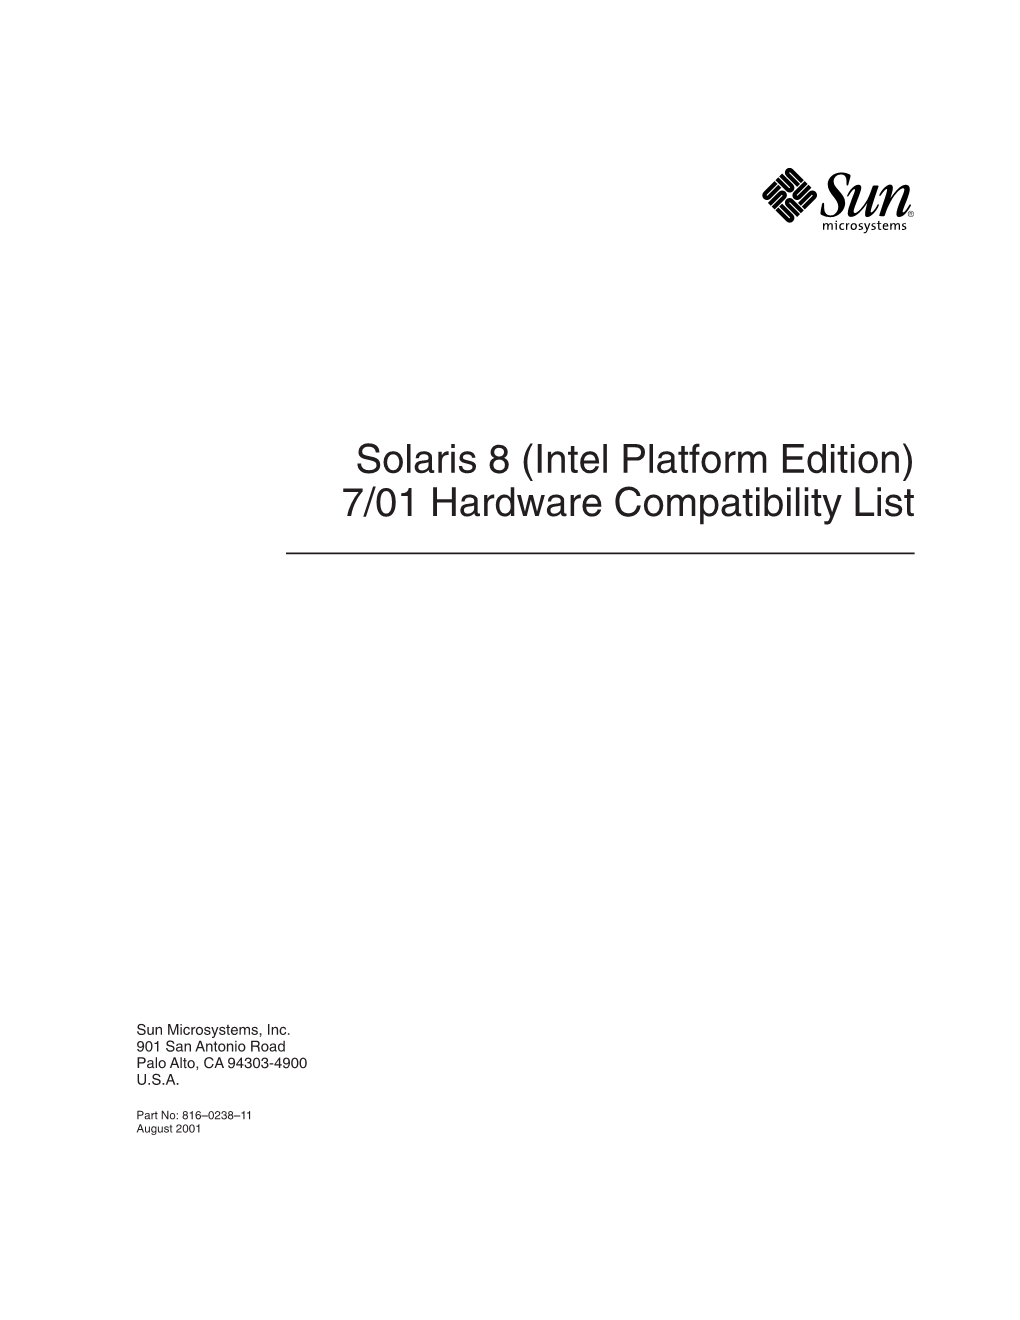 Intel Platform Edition) 7/01 Hardware Compatibility List